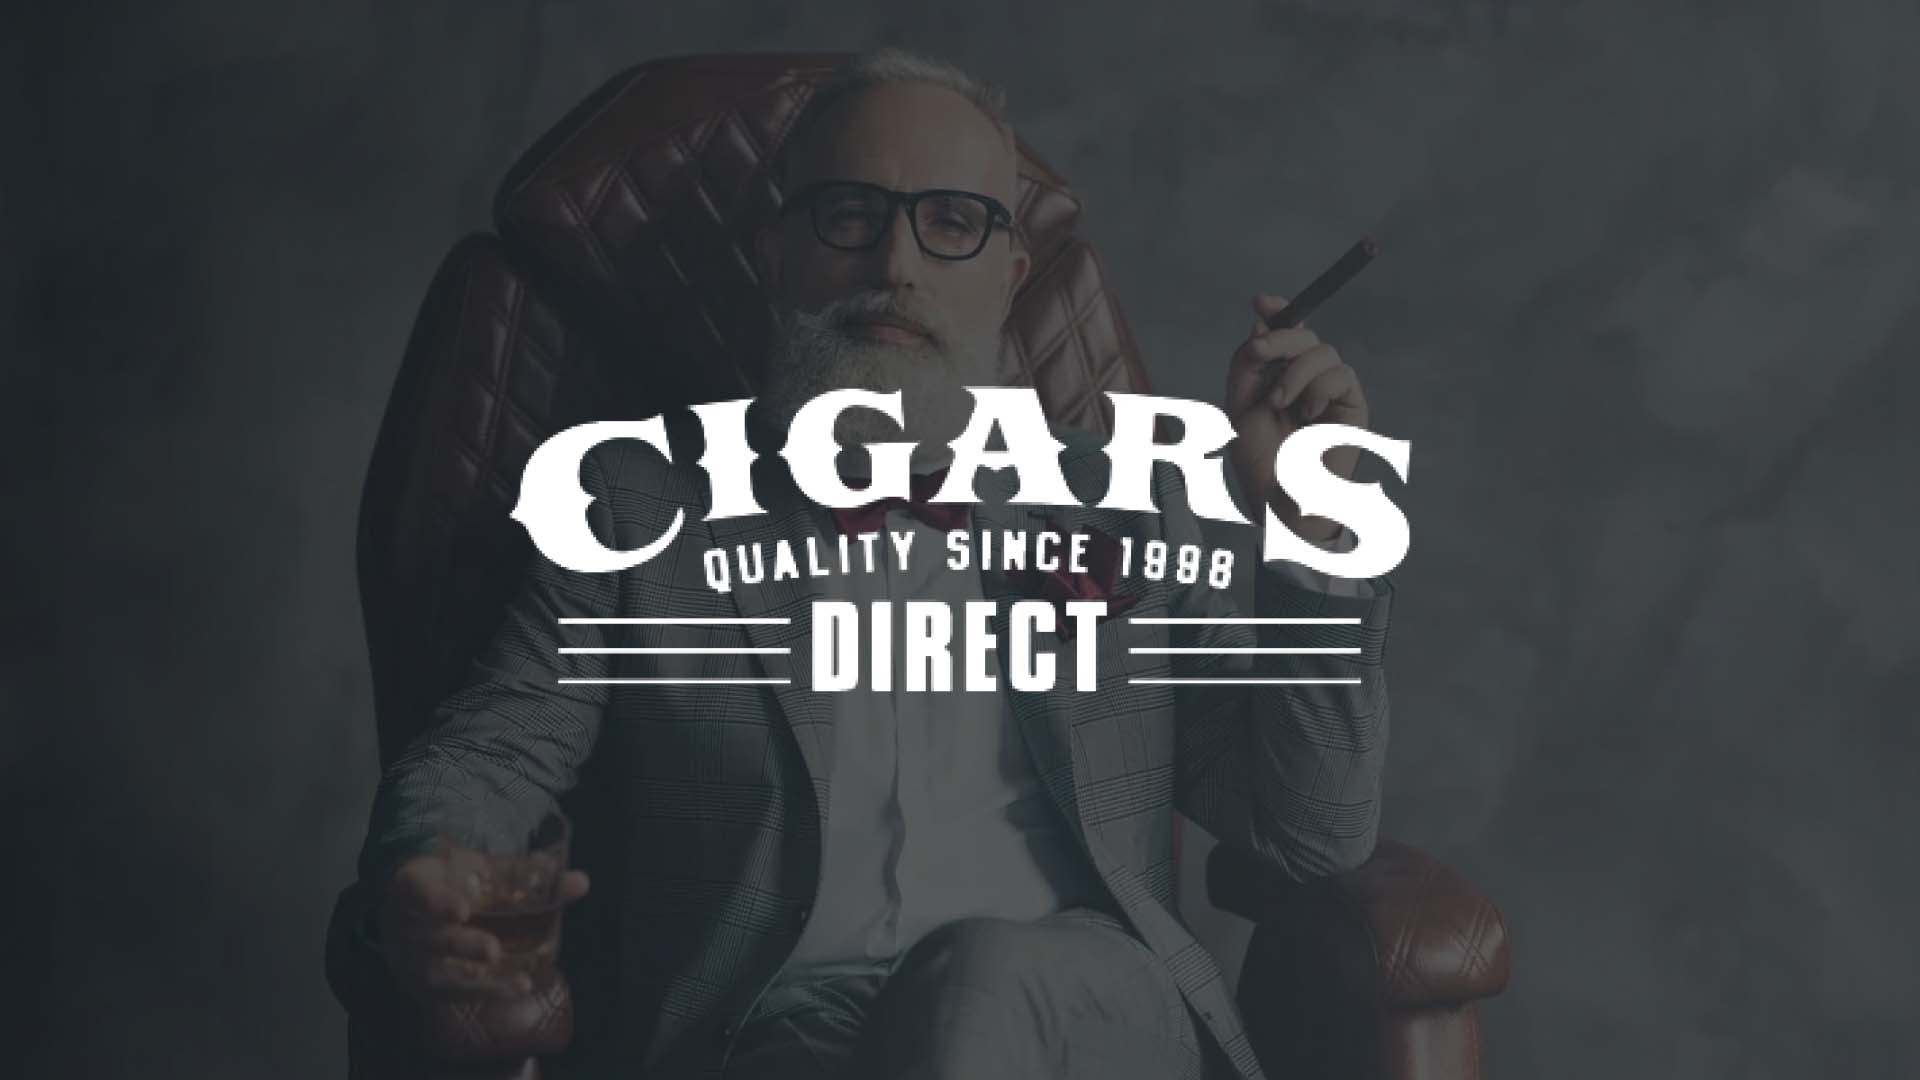 Cigars Direct